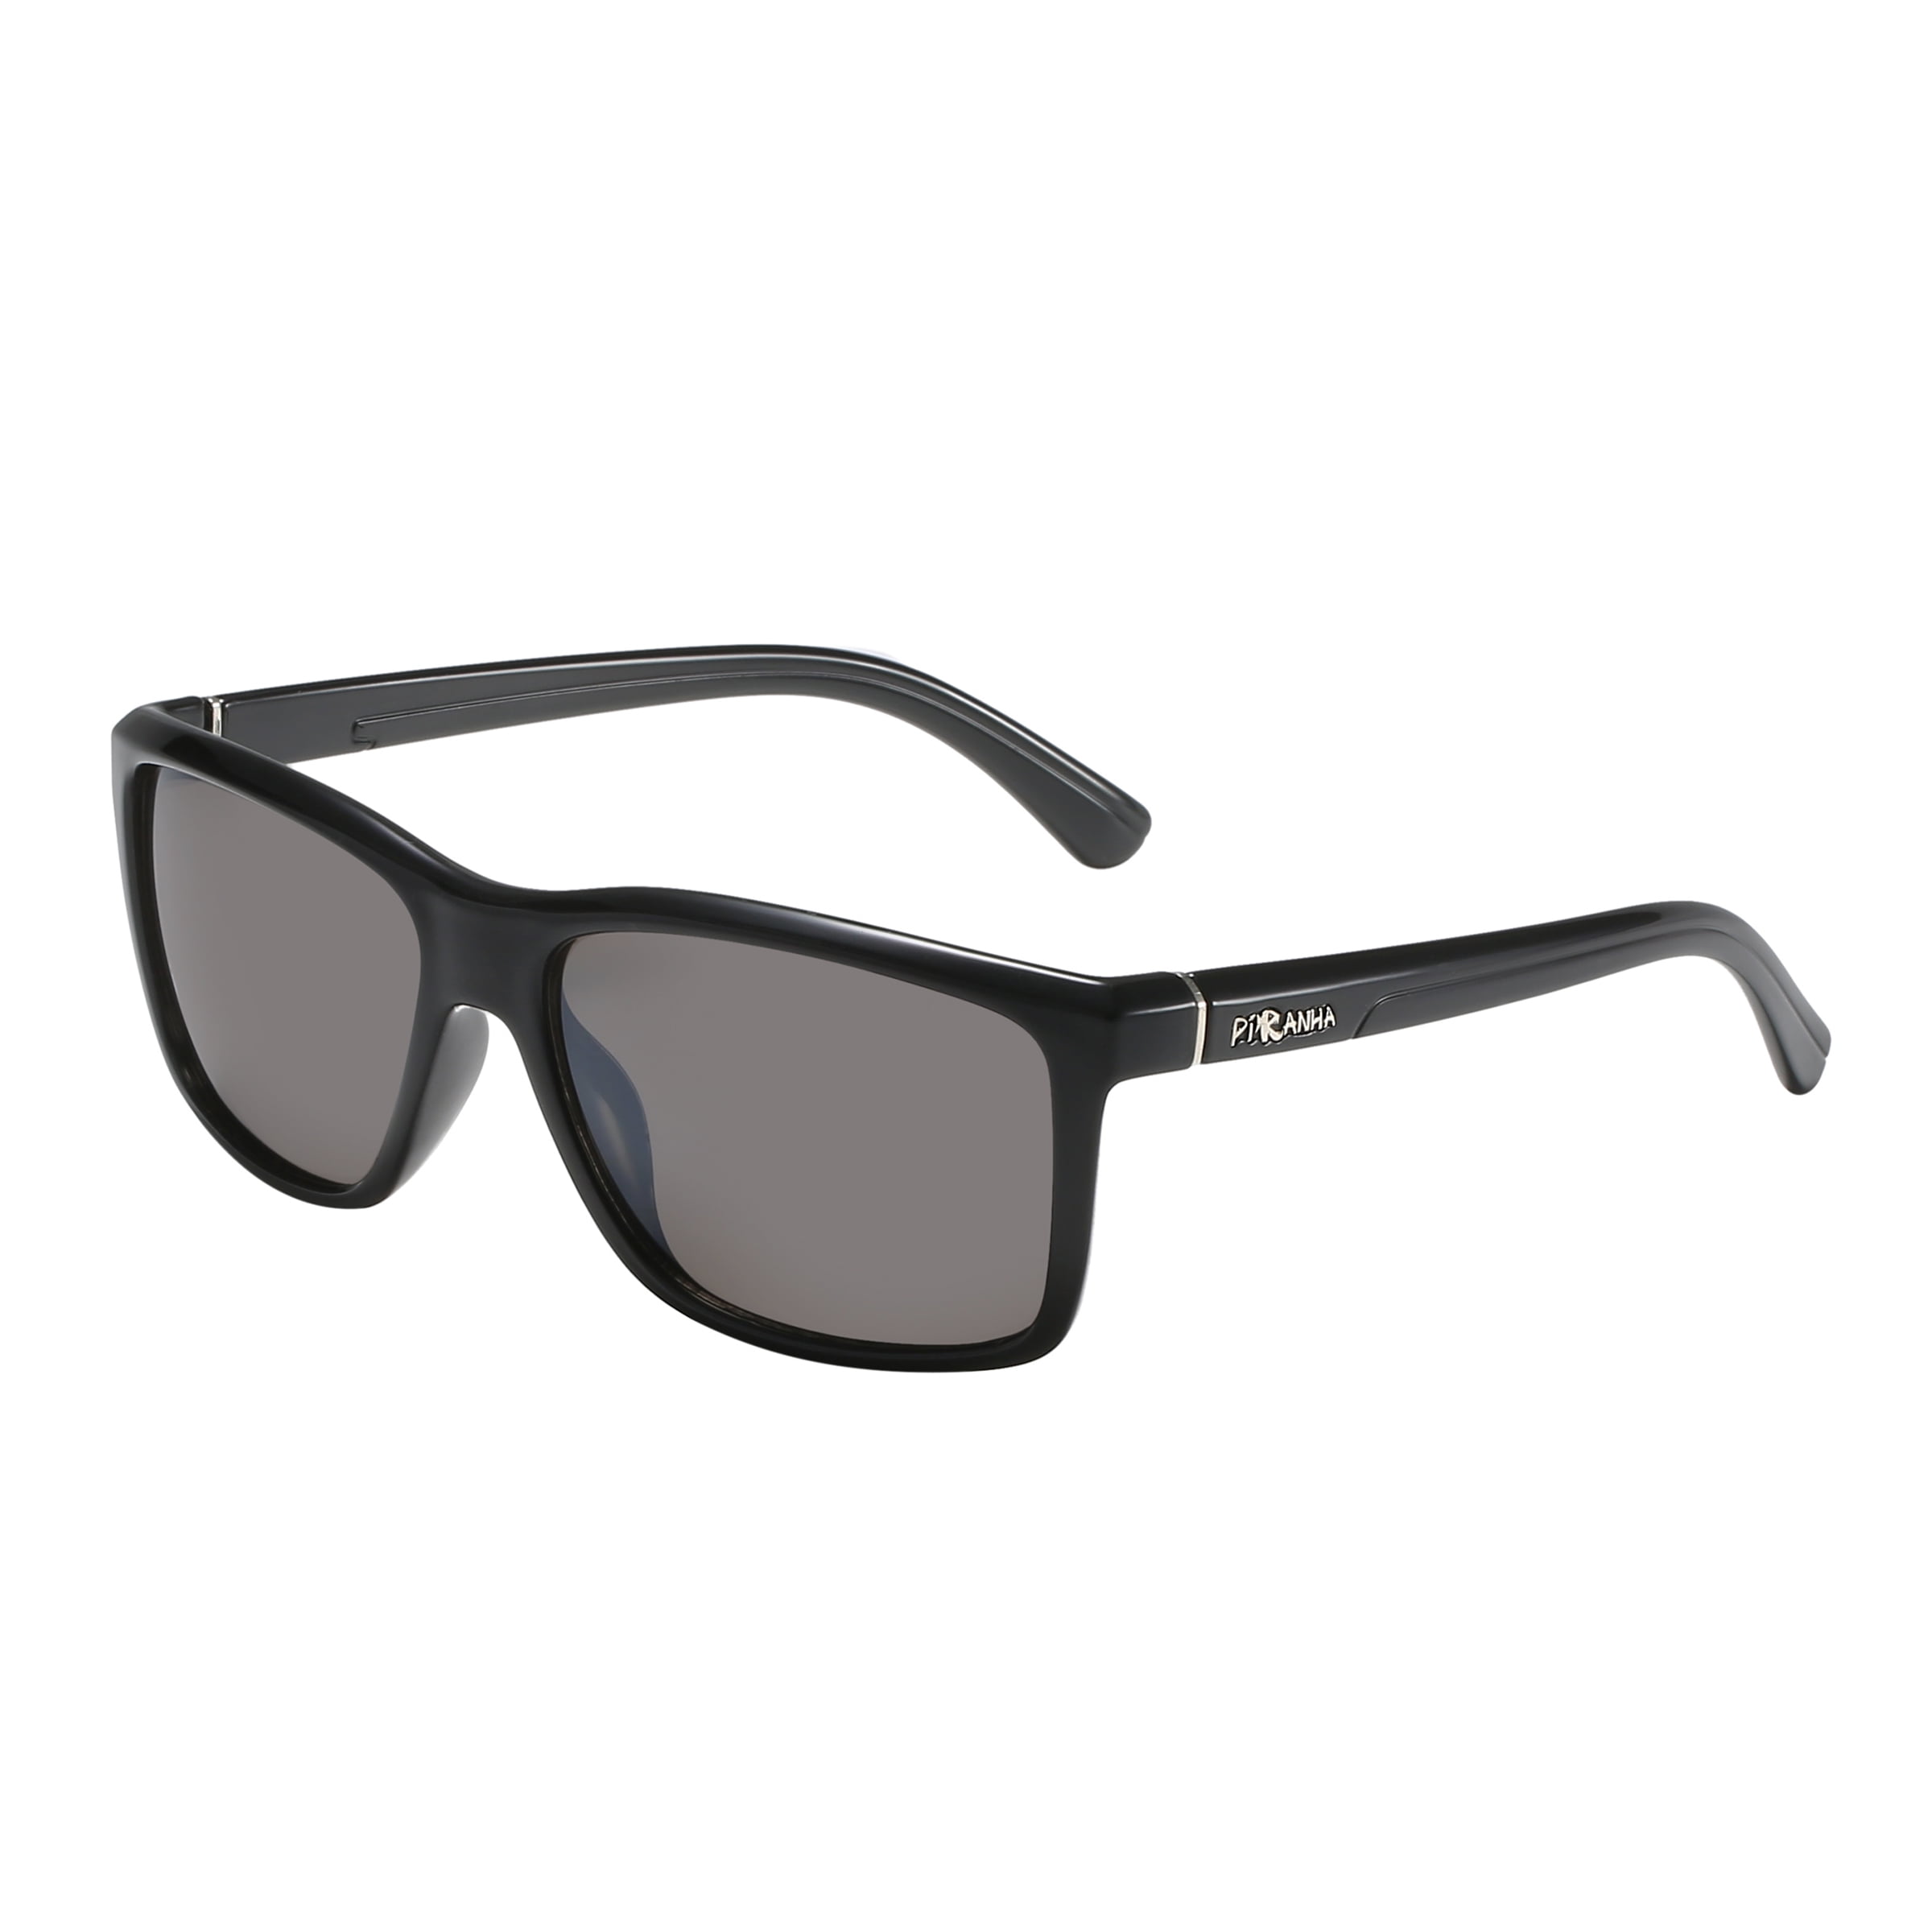 Piranha Eyewear Sydney Eco-Pact Black Unisex Sunglasses with Smoke Lens ...